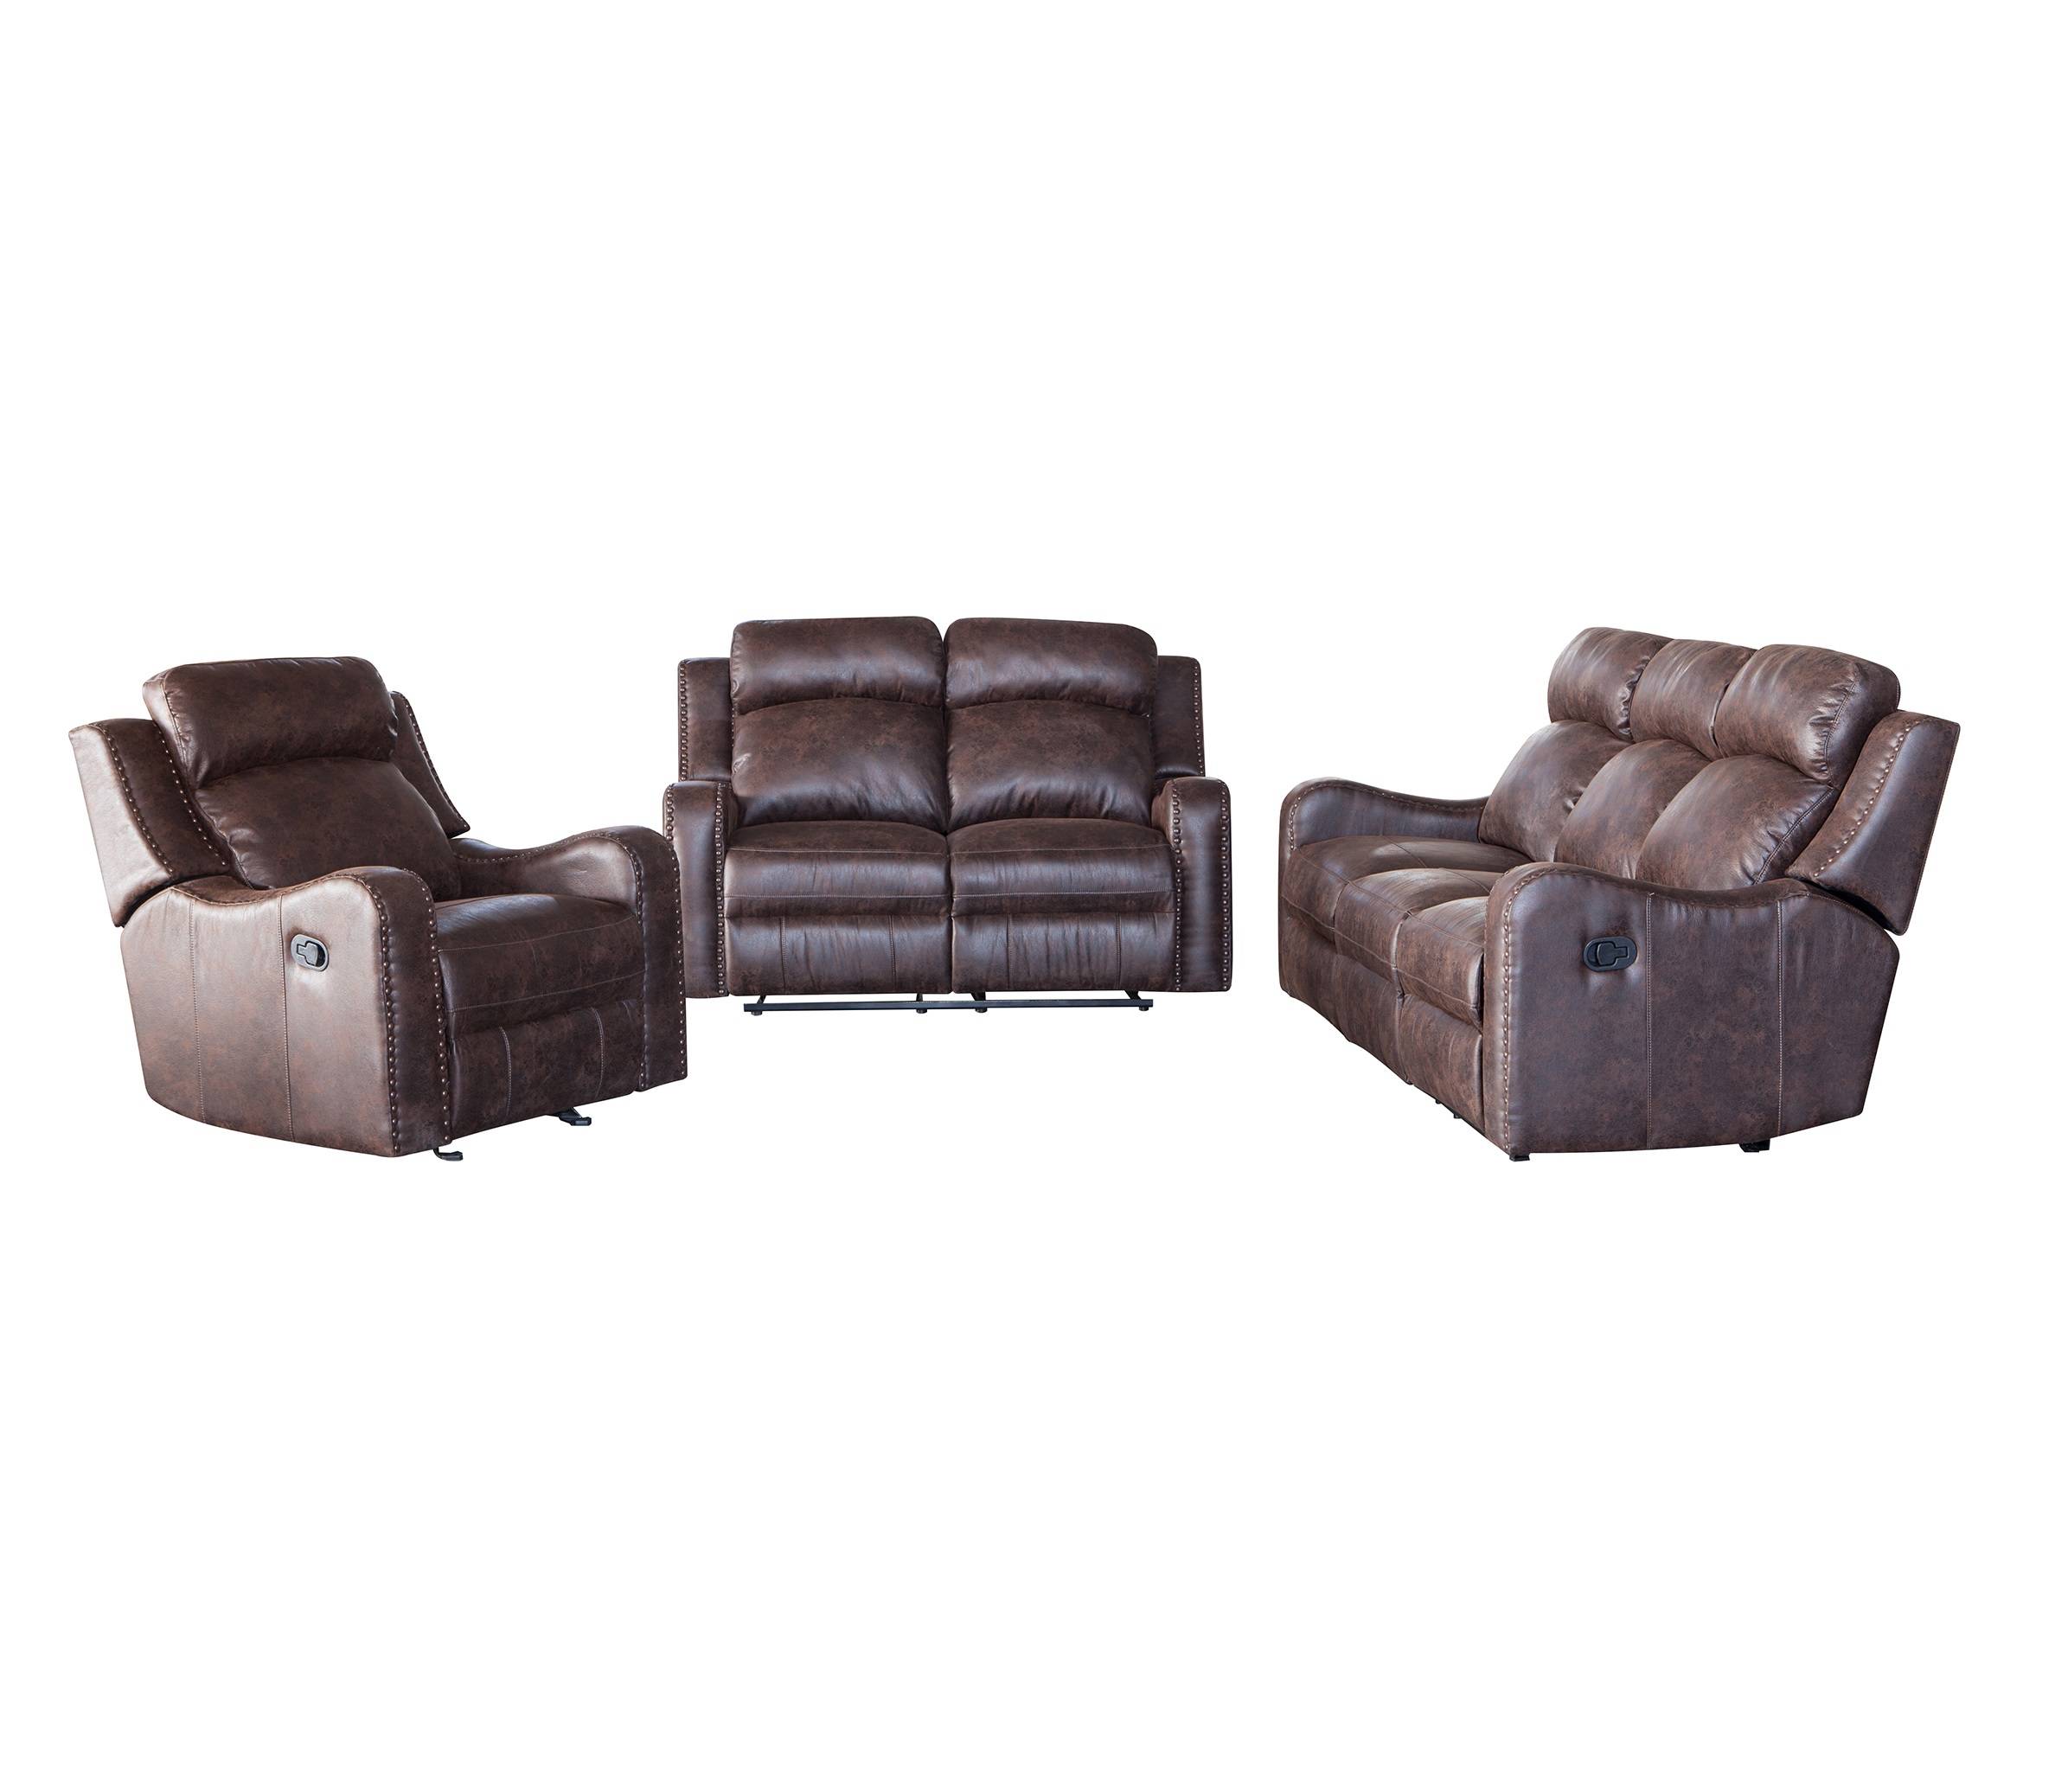 Hot sales living room furniture relax 1 2 3 electric recliner sofa